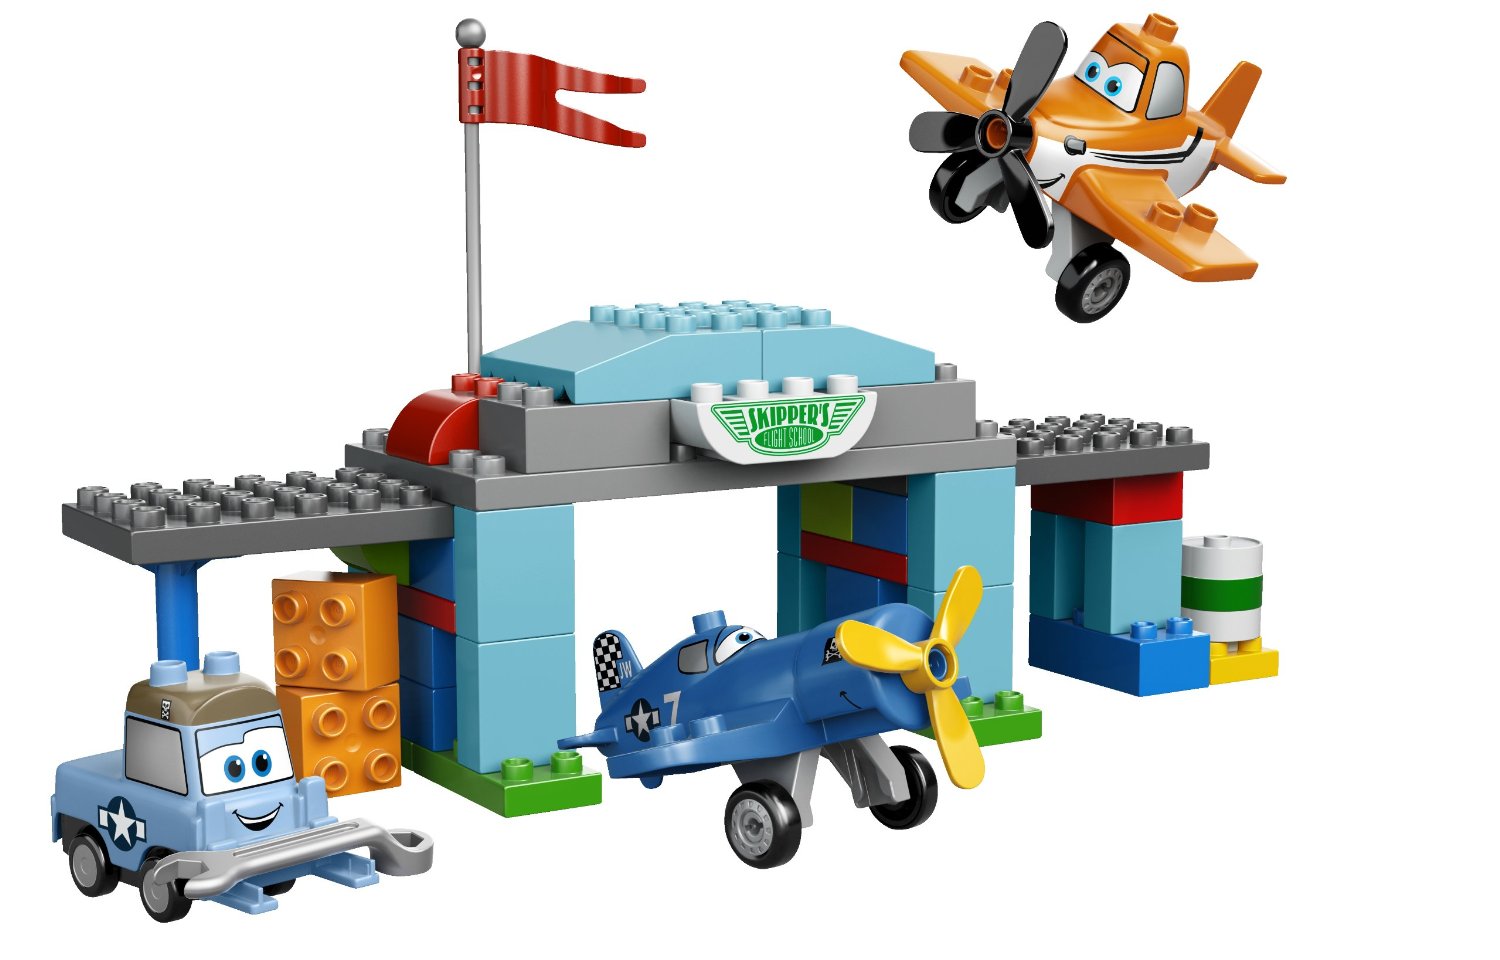 LEGO Duplo Disney Planes Skipper's Flight School 10511